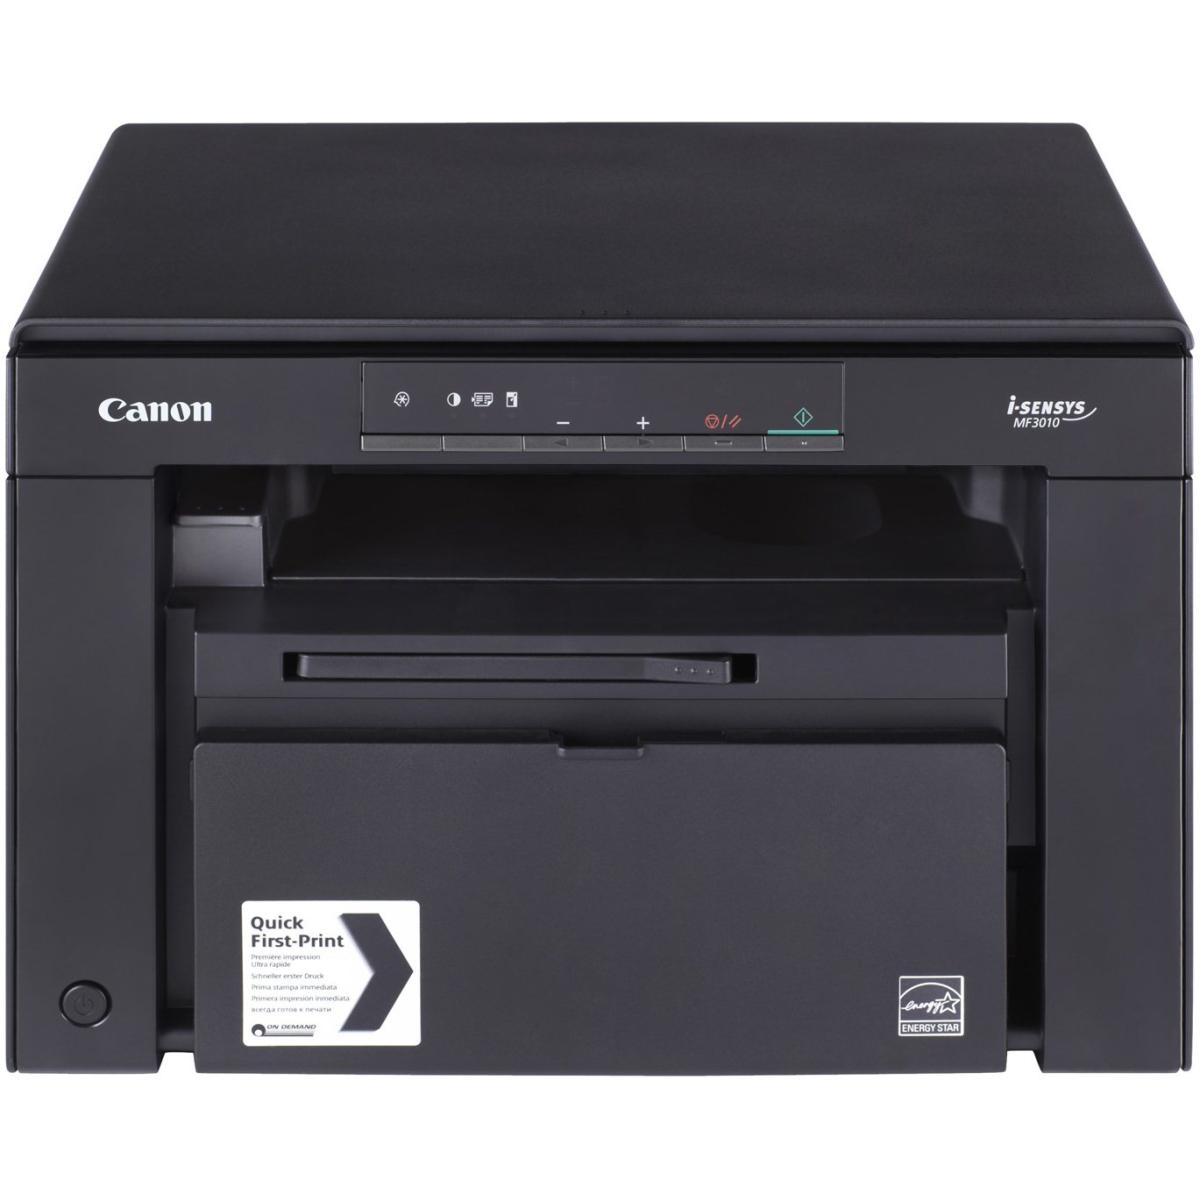 Canon i-SENSYS MF3010 Multifunction Printer